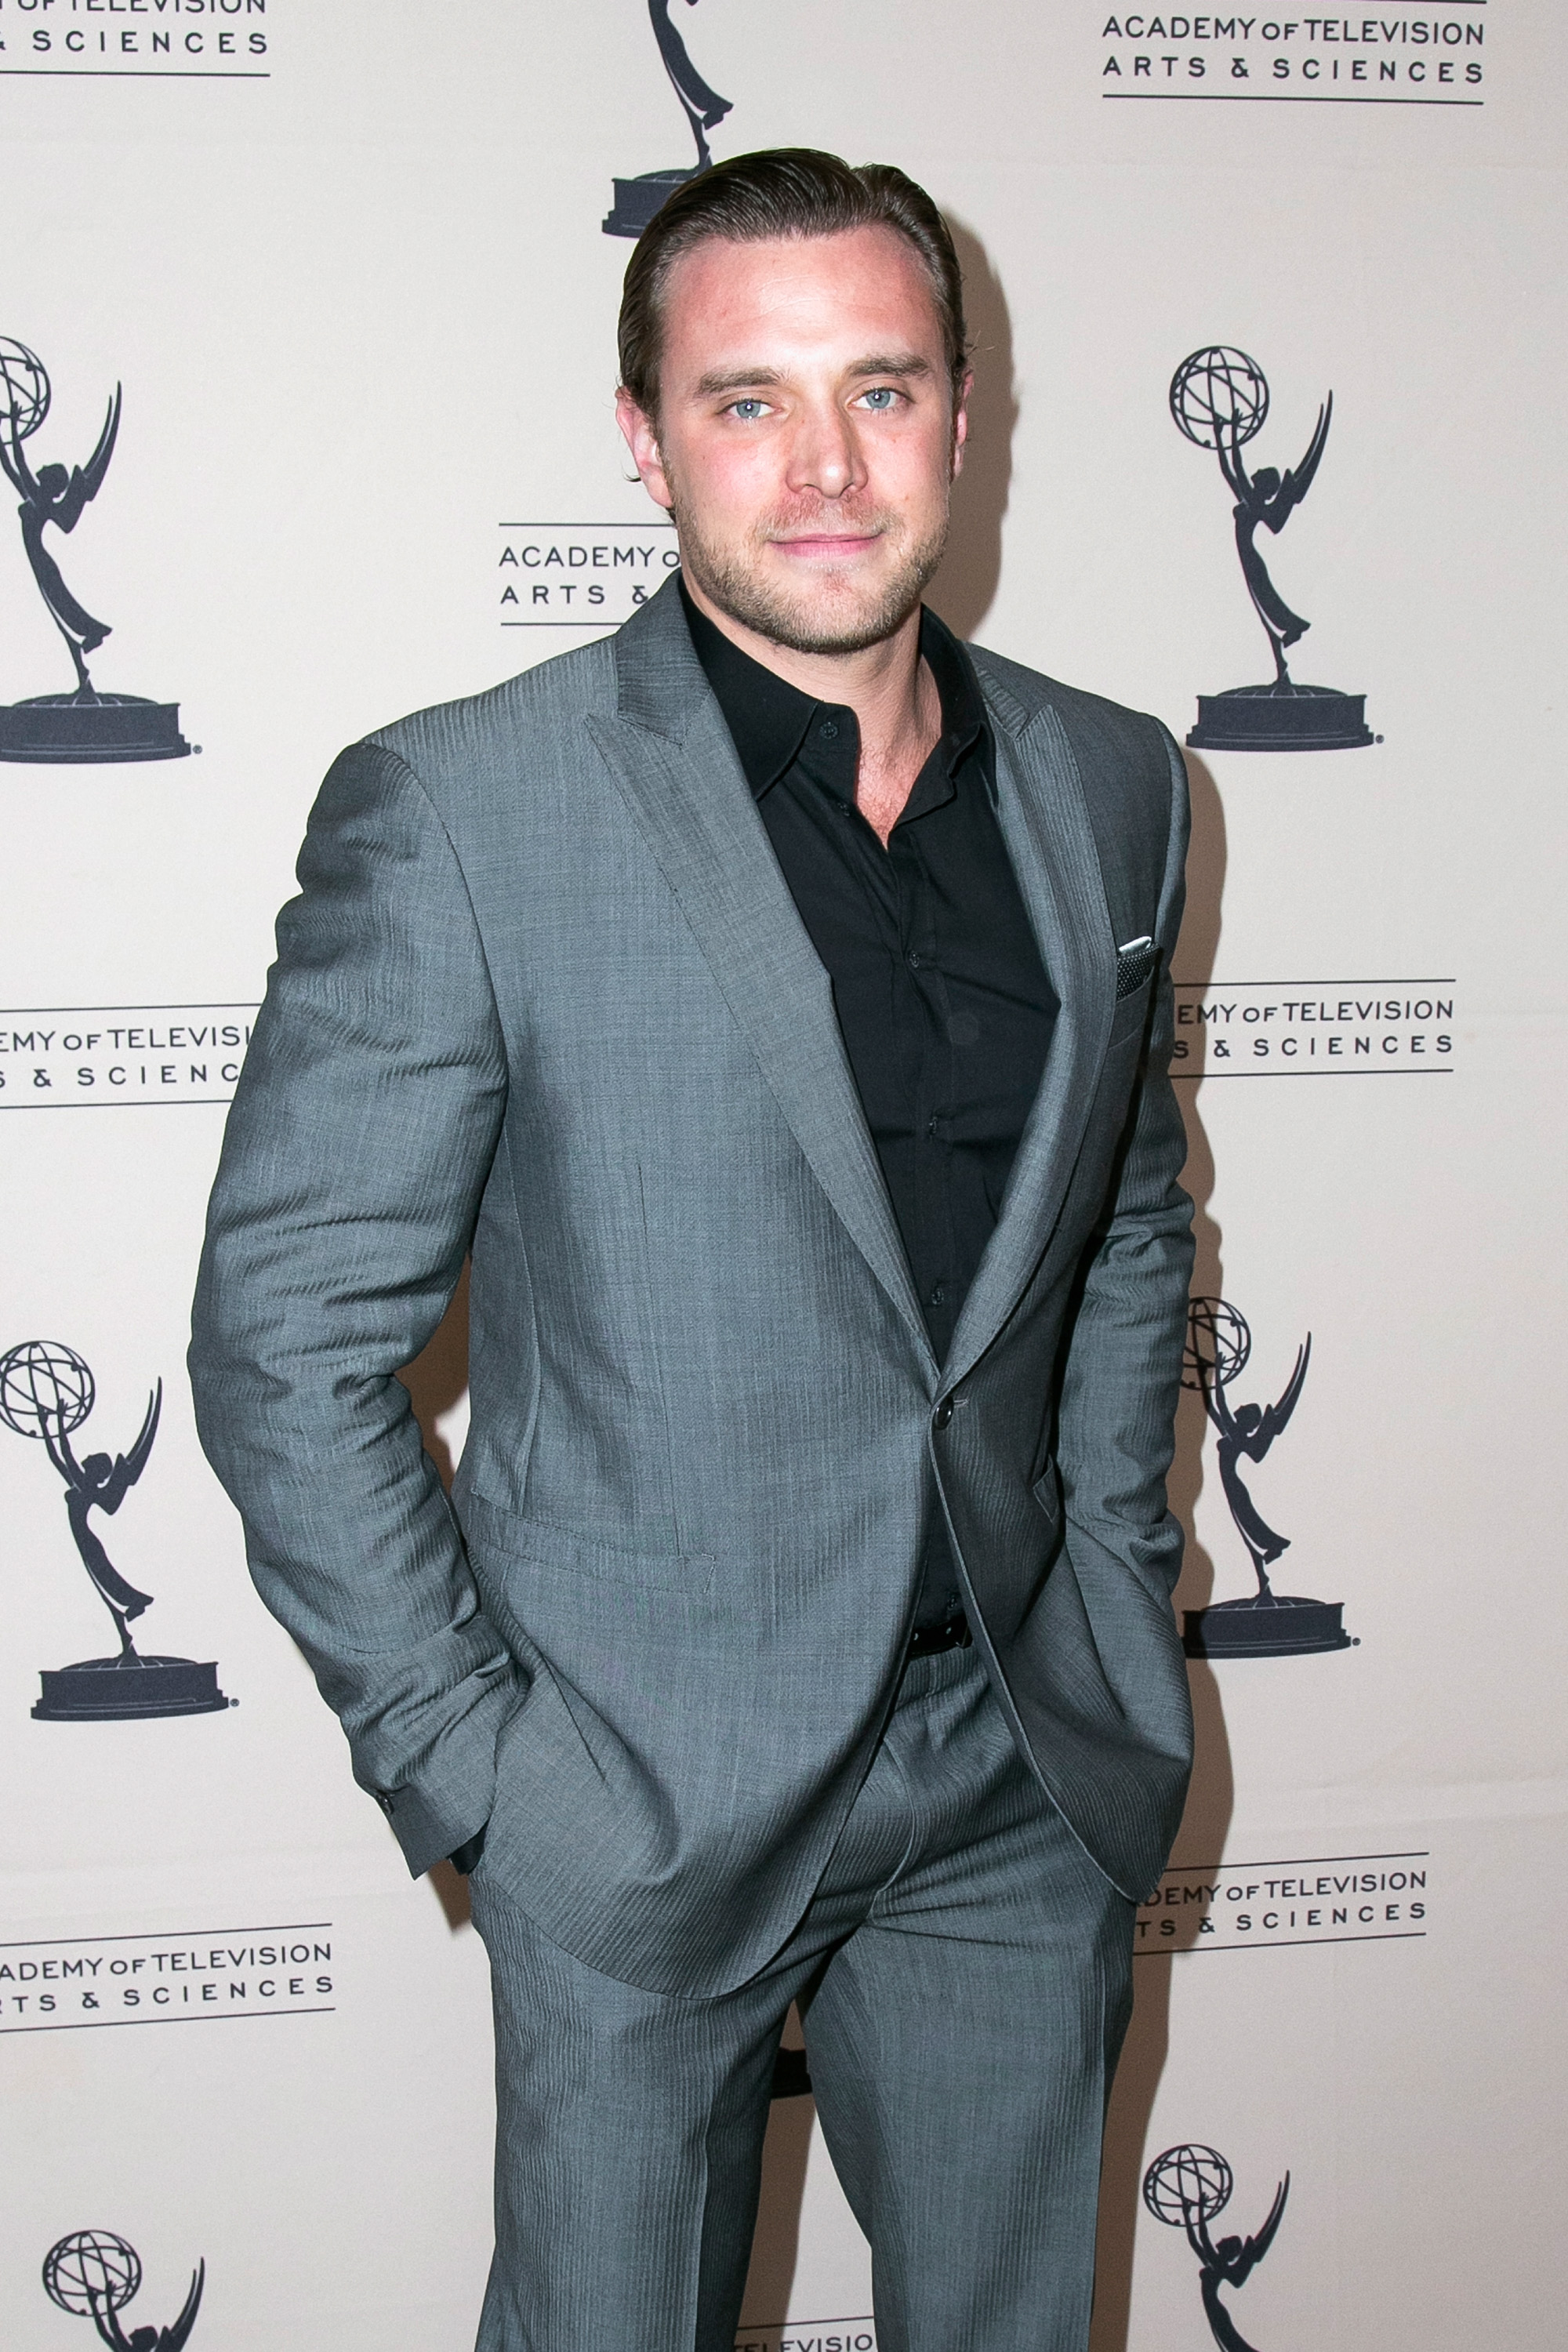 Billy Miller bei der 40th Annual Daytime Emmy Nominees Cocktail Reception in Beverly Hills, 2013 | Quelle: Getty Images